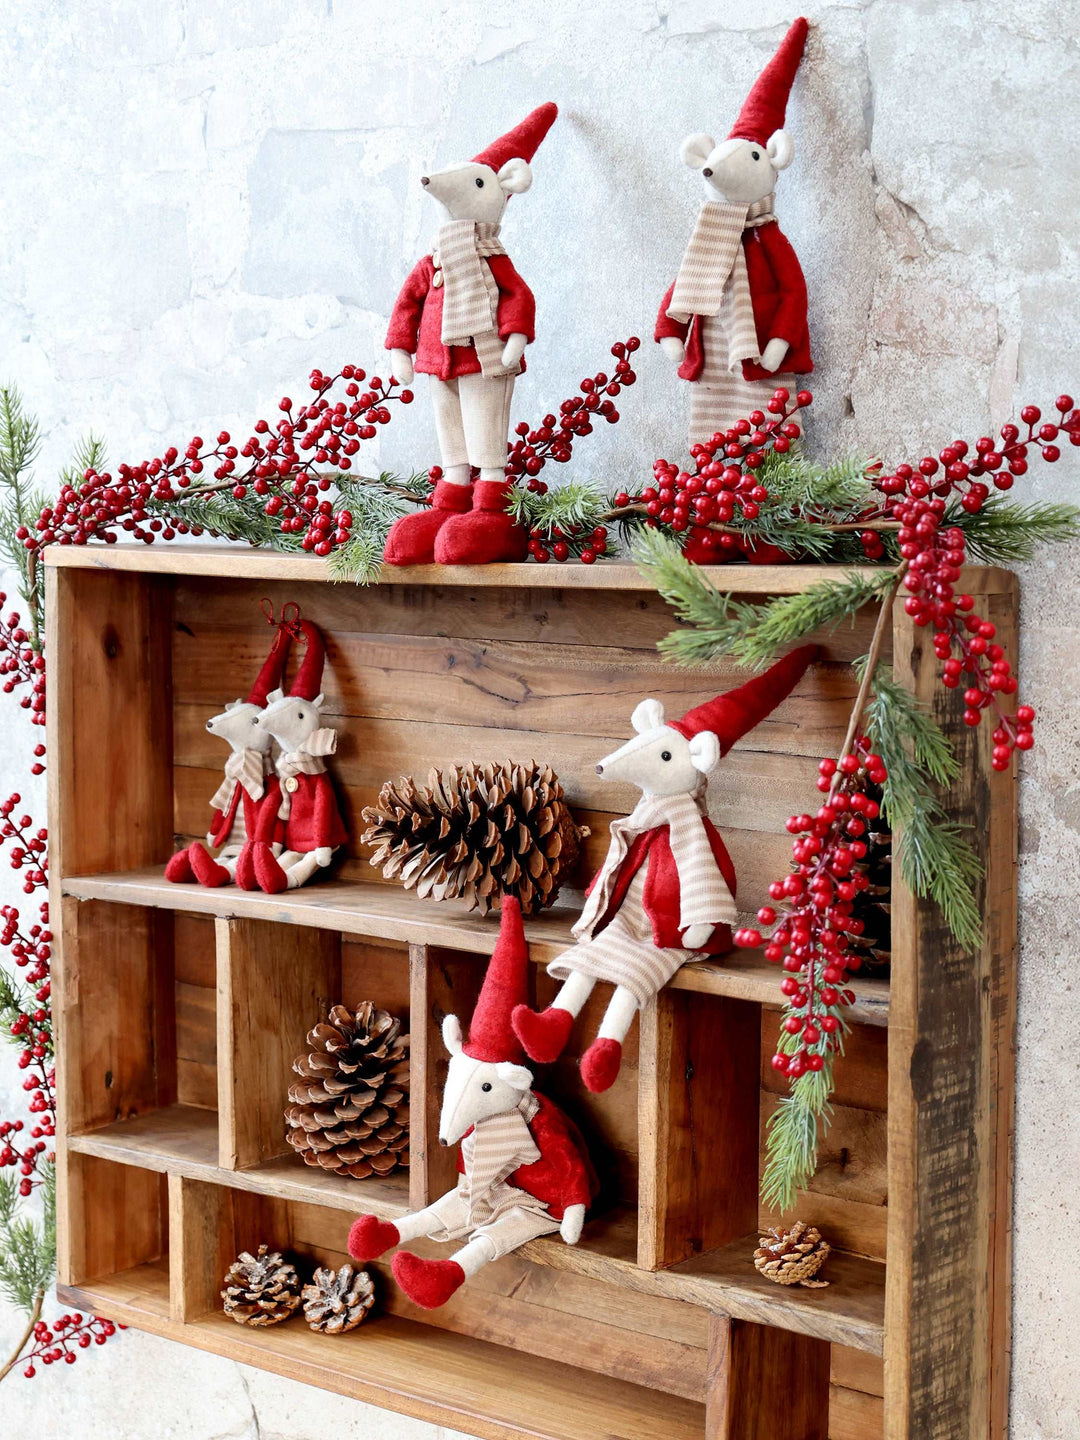 Christmas display featuring felt mice